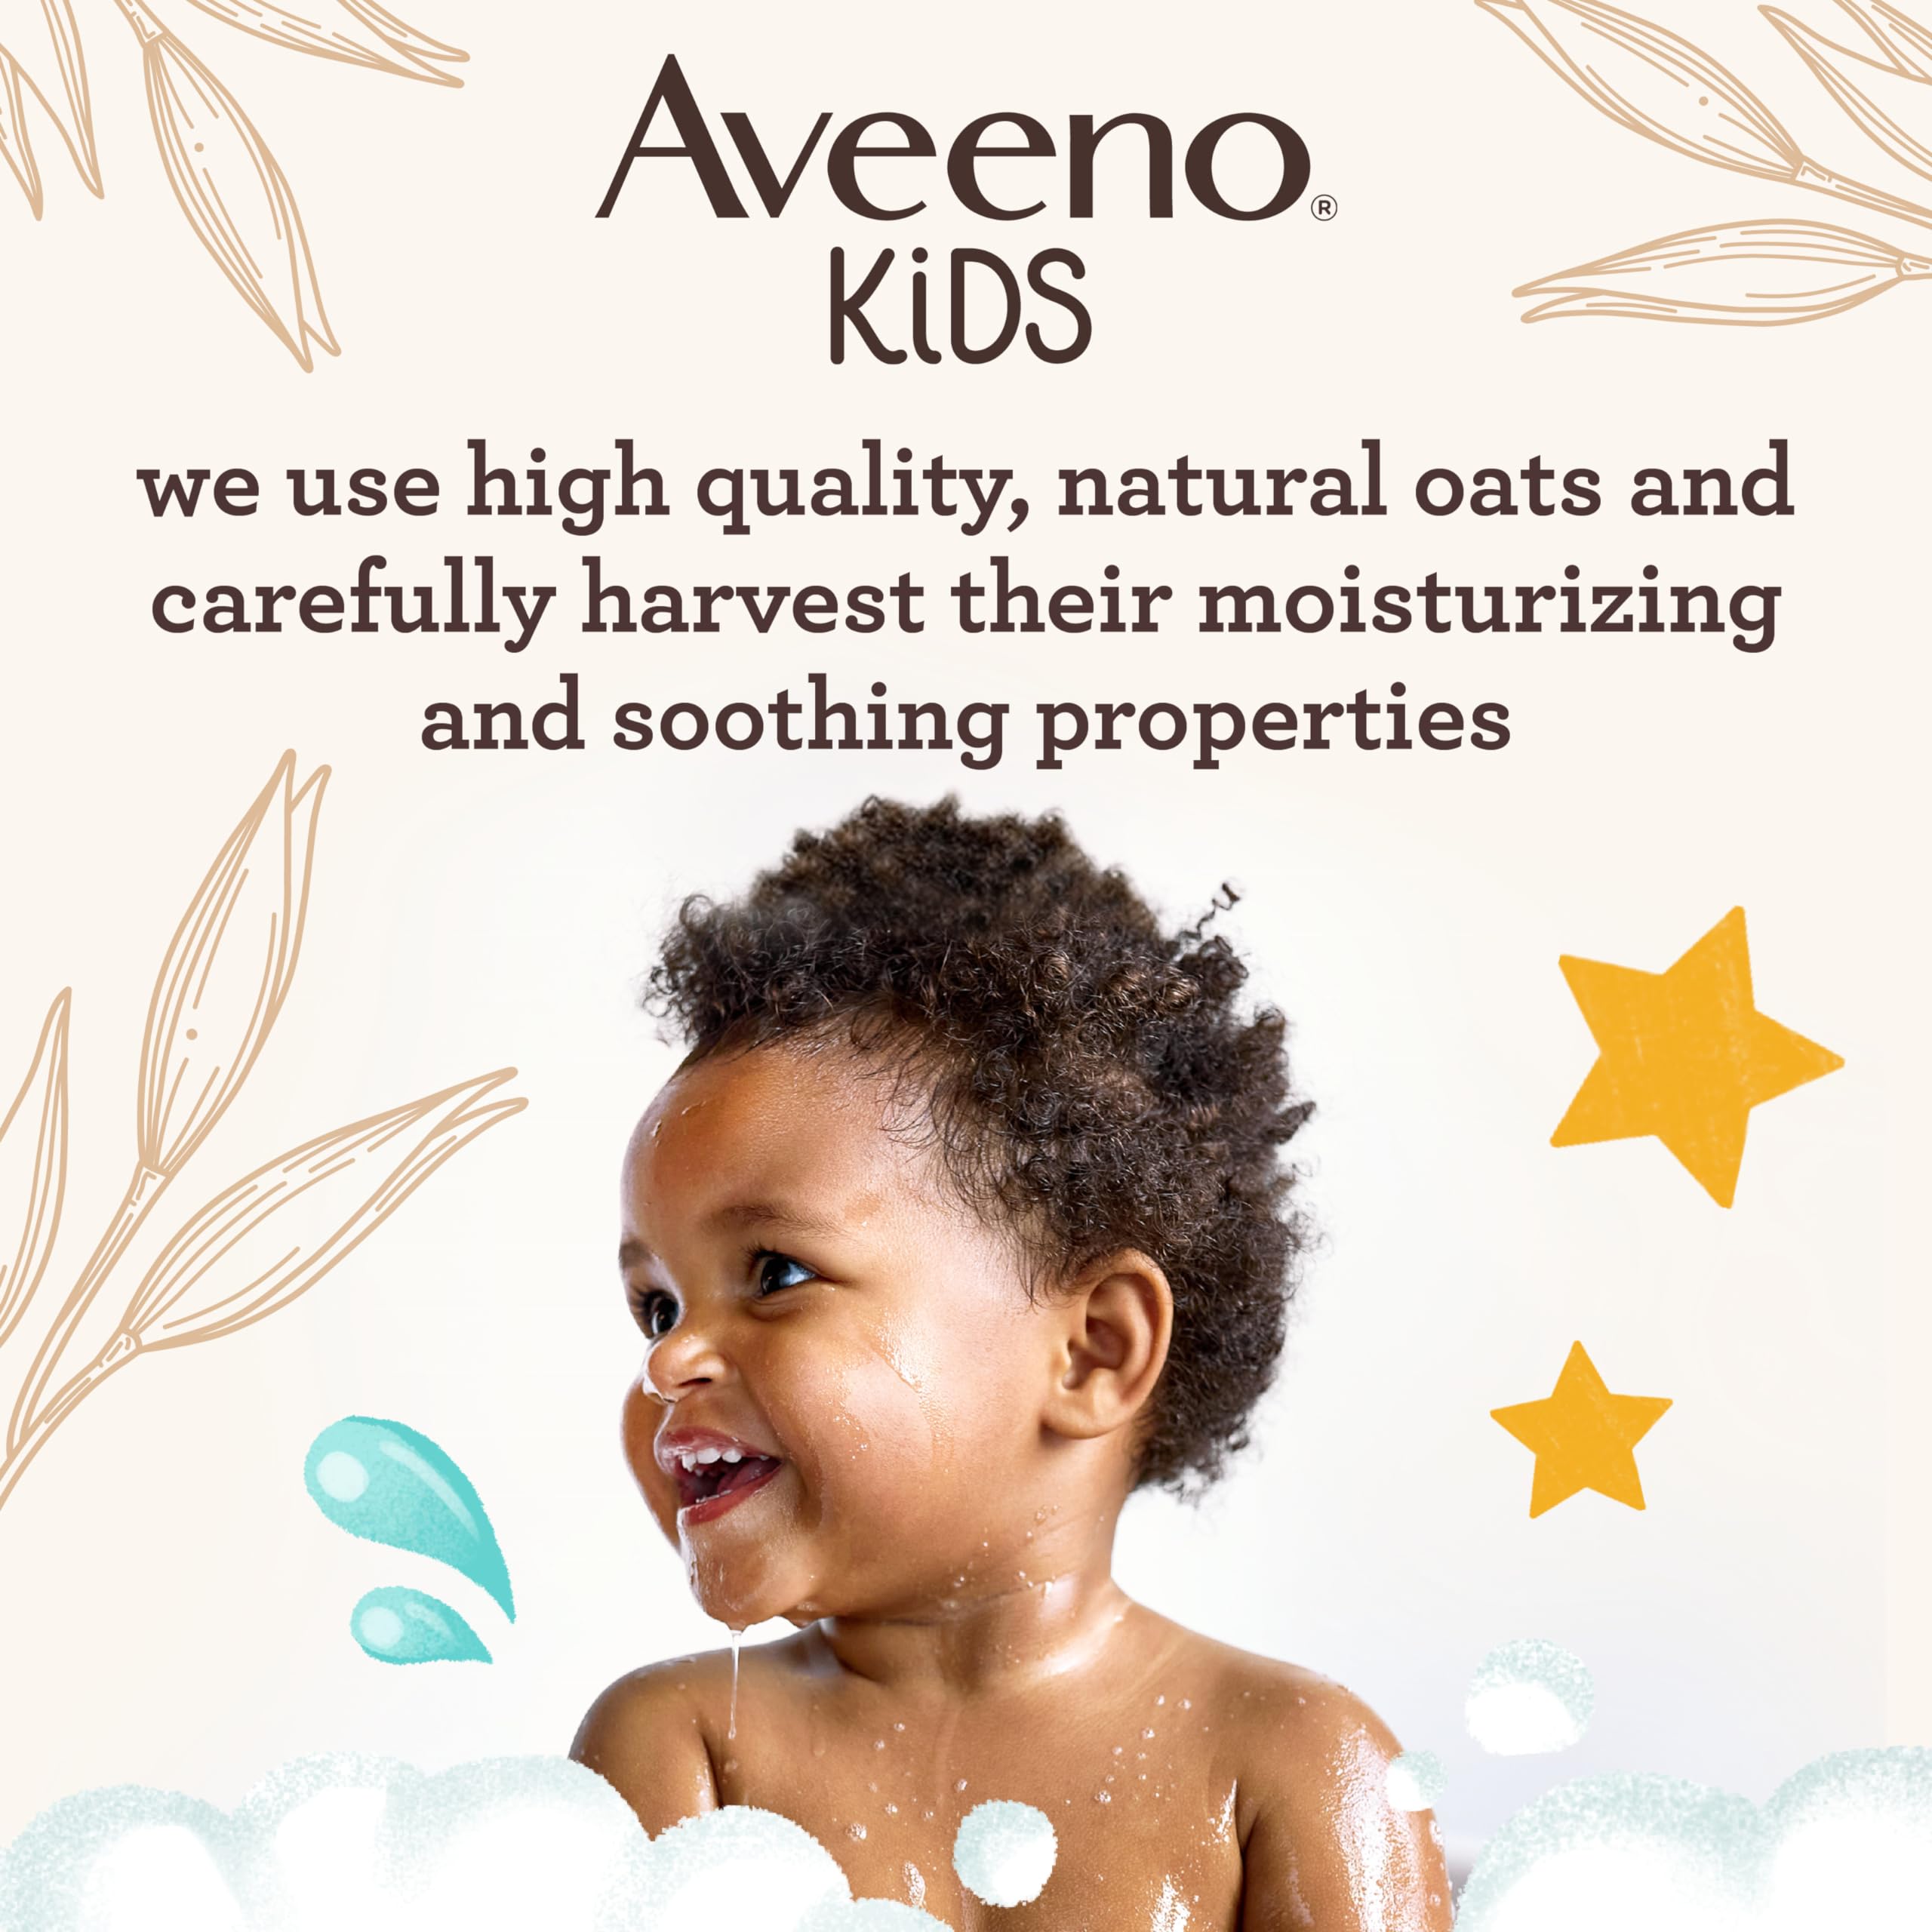 Aveeno Kids Bubble Bath, Children's Bubble Bath for Sensitive Skin with Oat Extract, Kid's Bath Liquid Nourishes Skin & Makes Big, Fluffy Bubbles for Bath Time Fun, Dye-Free, 19.2 fl. Oz